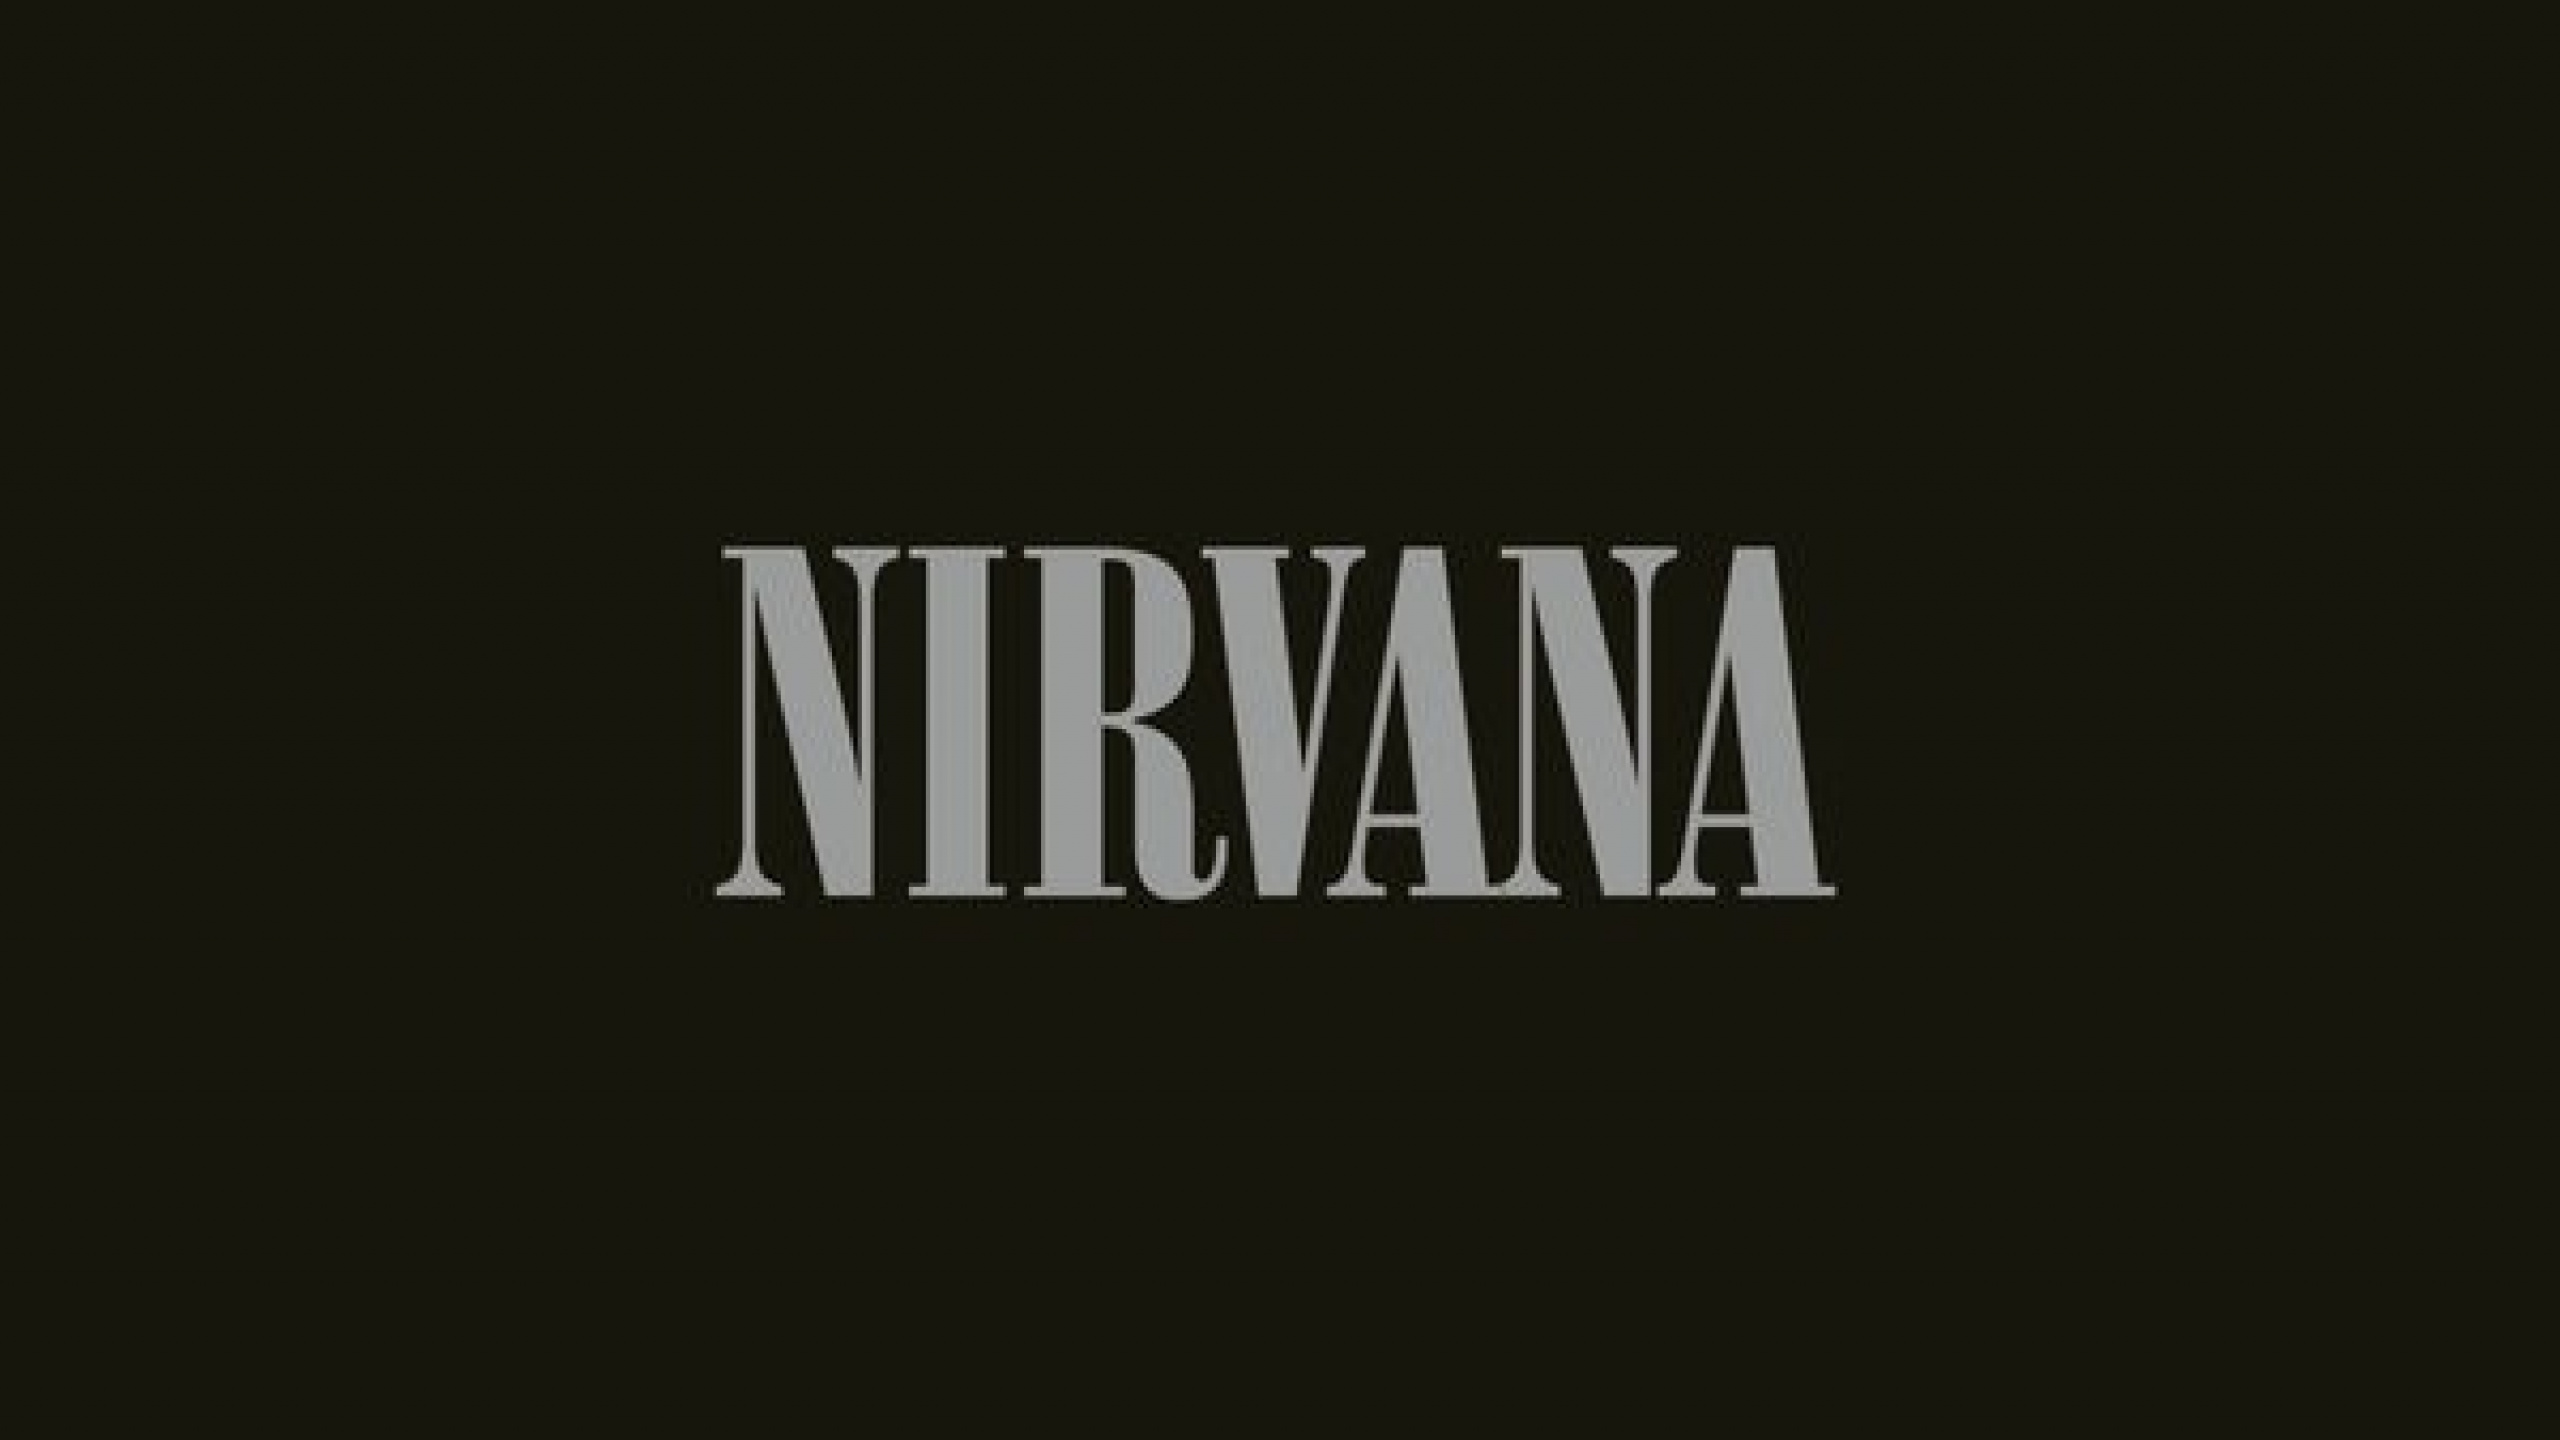 Nirvana, Album, Graphic Design, Text, Black. Wallpaper in 2560x1440 Resolution